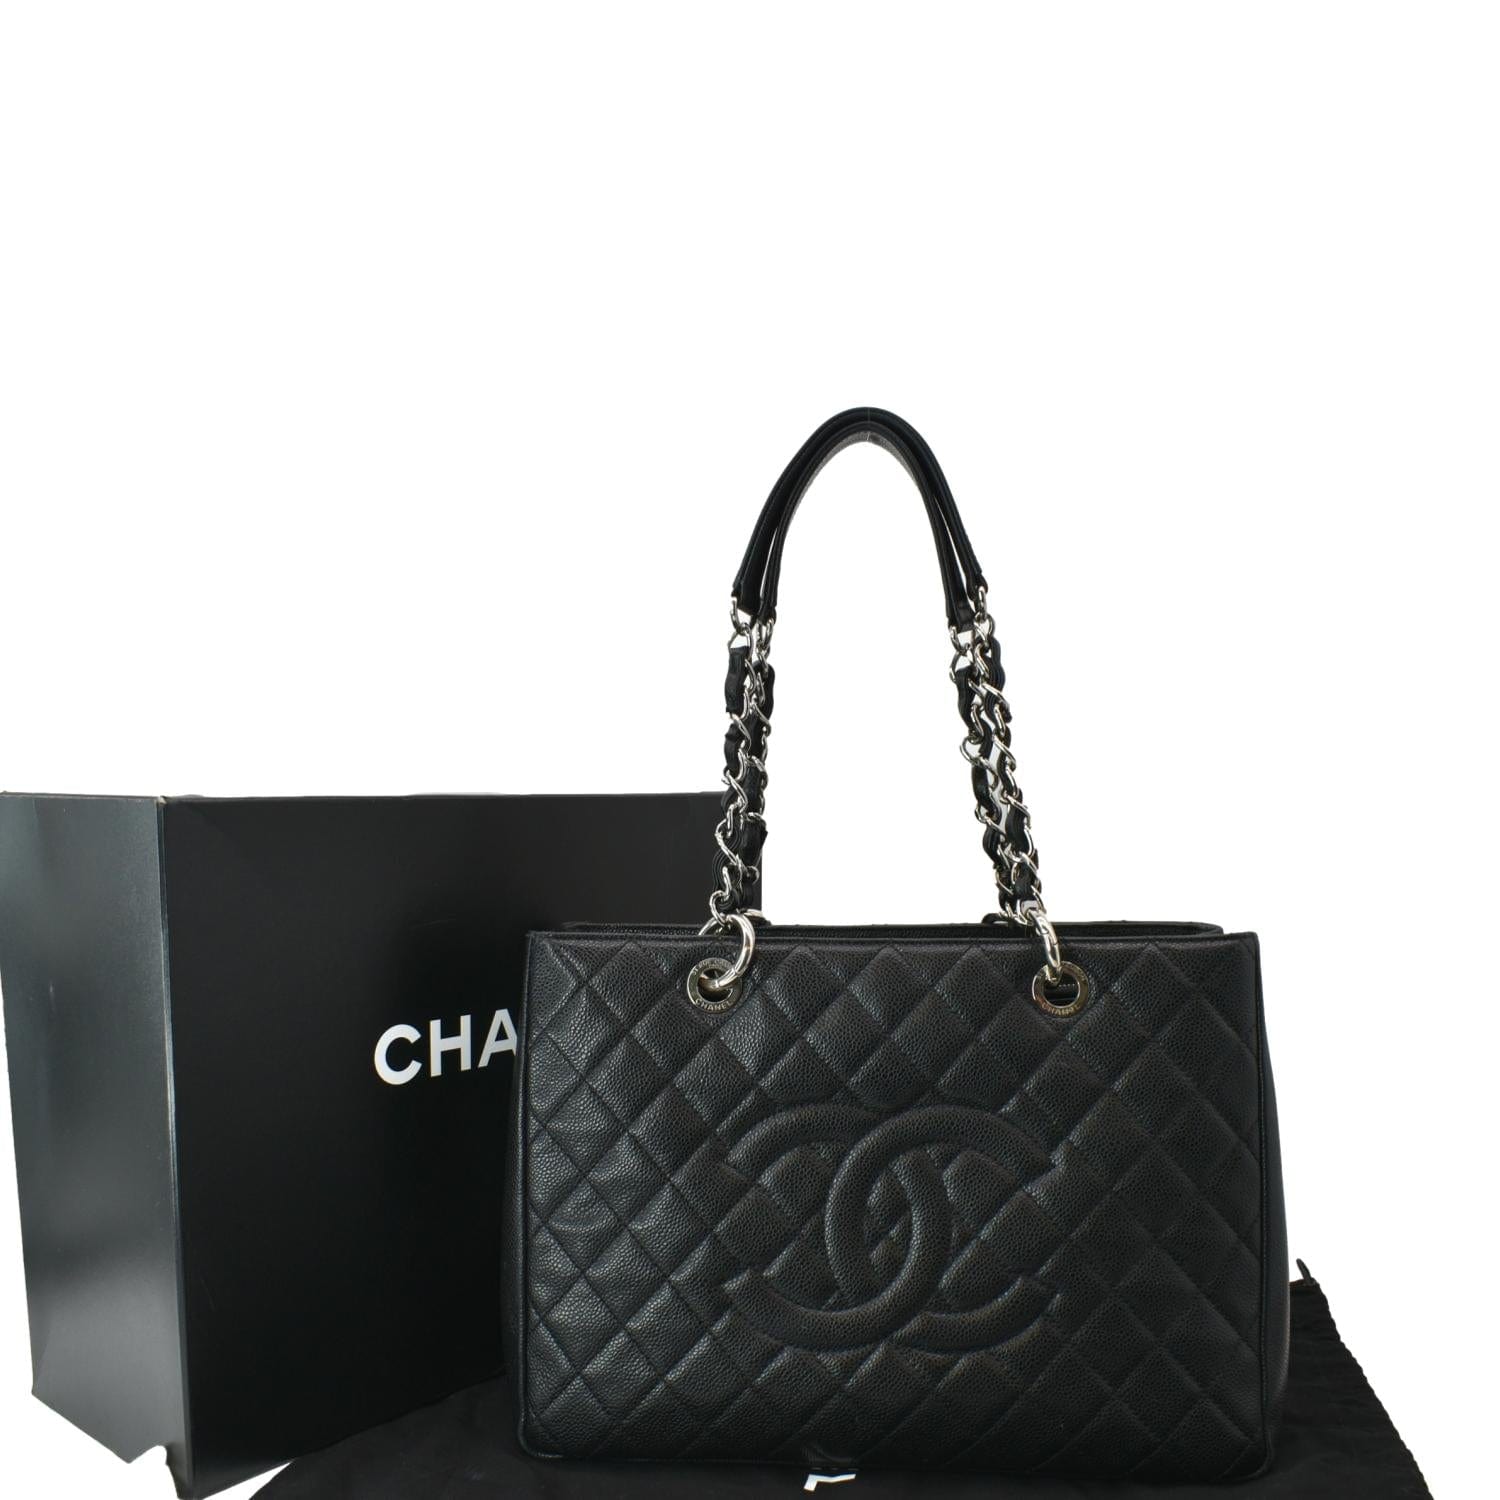 Chanel GST (Grand Shopping Tote) Black Caviar Leather & Silver Hardware